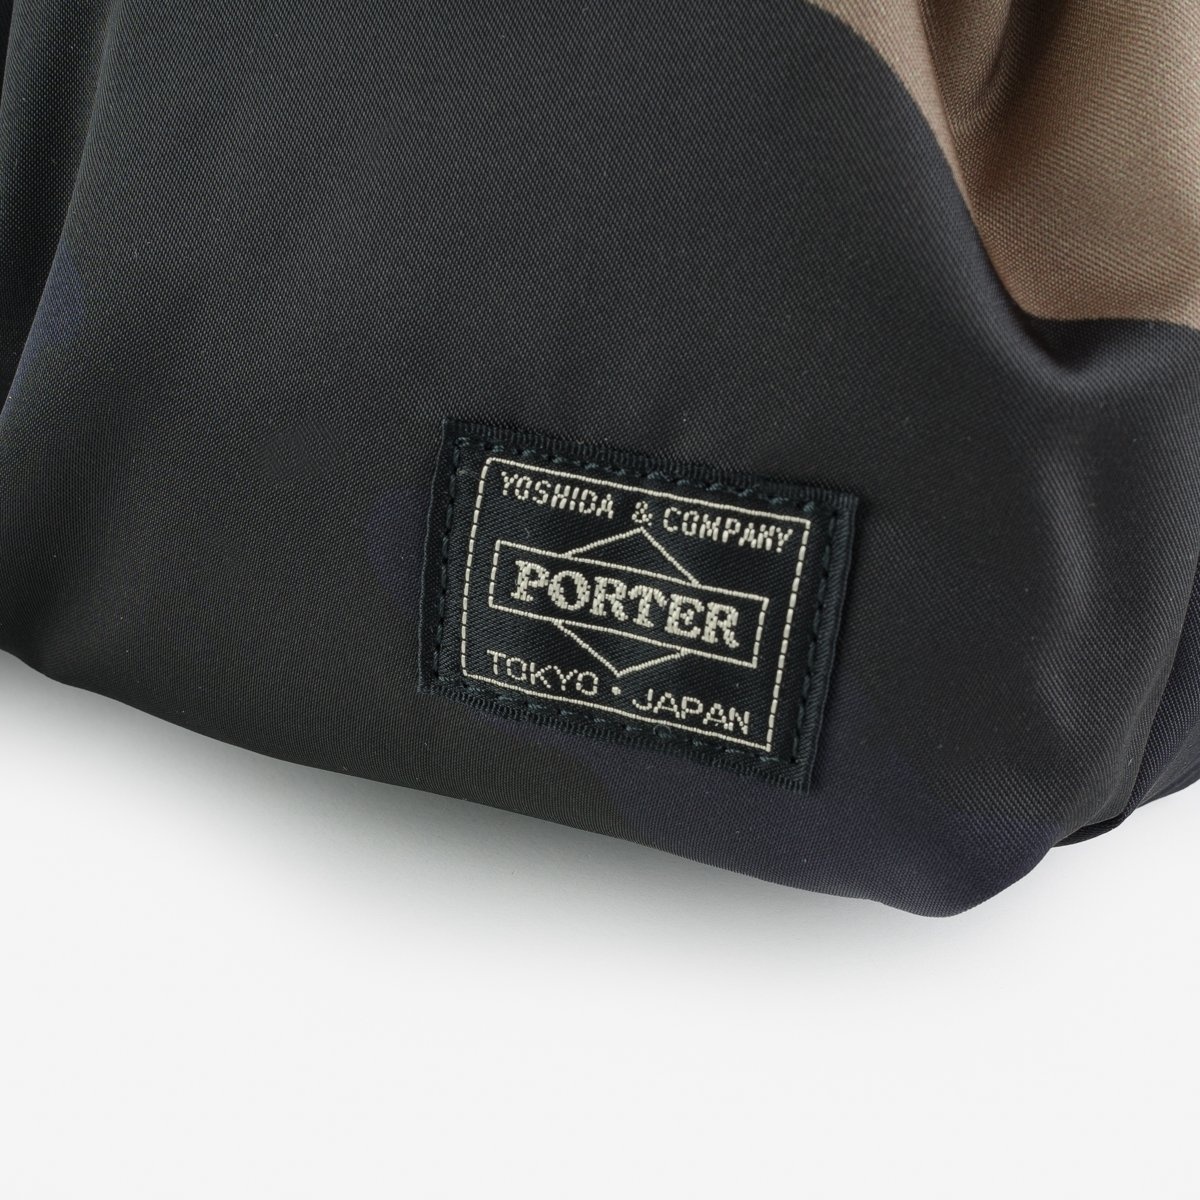 POR-SHLDR-CAM Porter - Yoshida & Co. - Counter Shade Shoulder Bag - Camo - 2